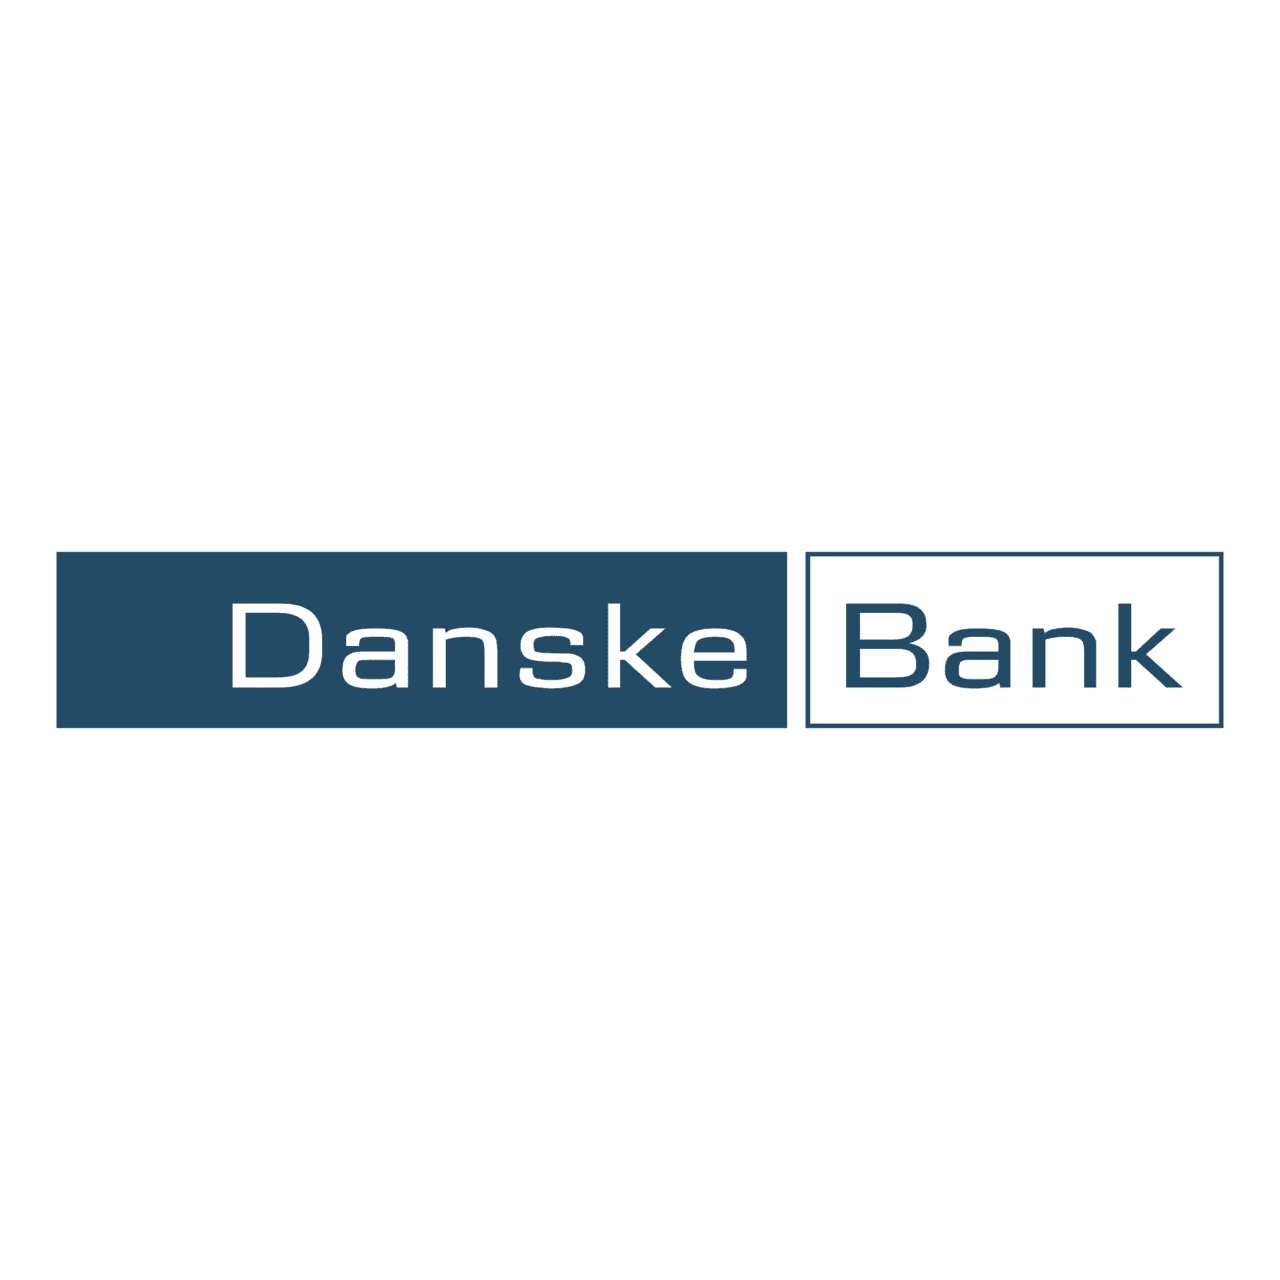 Danske Bank සමඟ ඉහළම ඔන්ලයින් කැසිනෝ